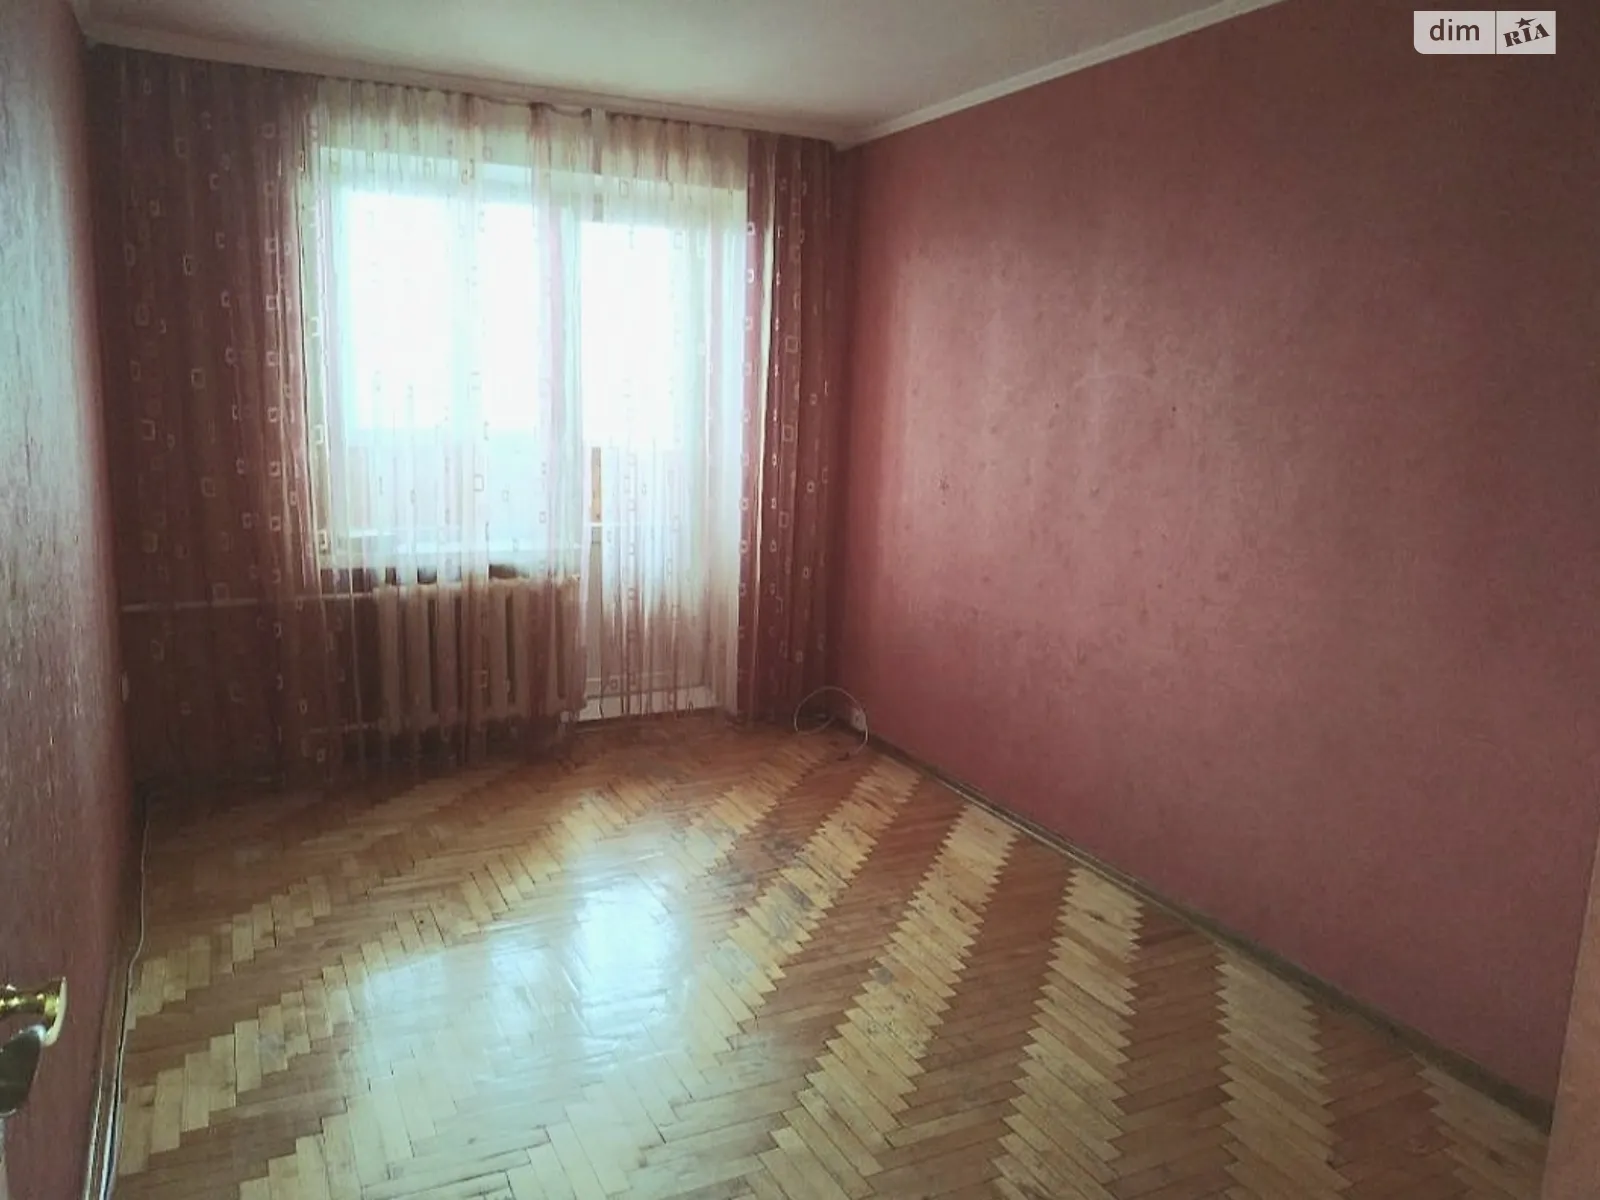 3-кімнатна квартира 47 кв. м у Луцьку, вул. Шота Руставелі, 13 - фото 1